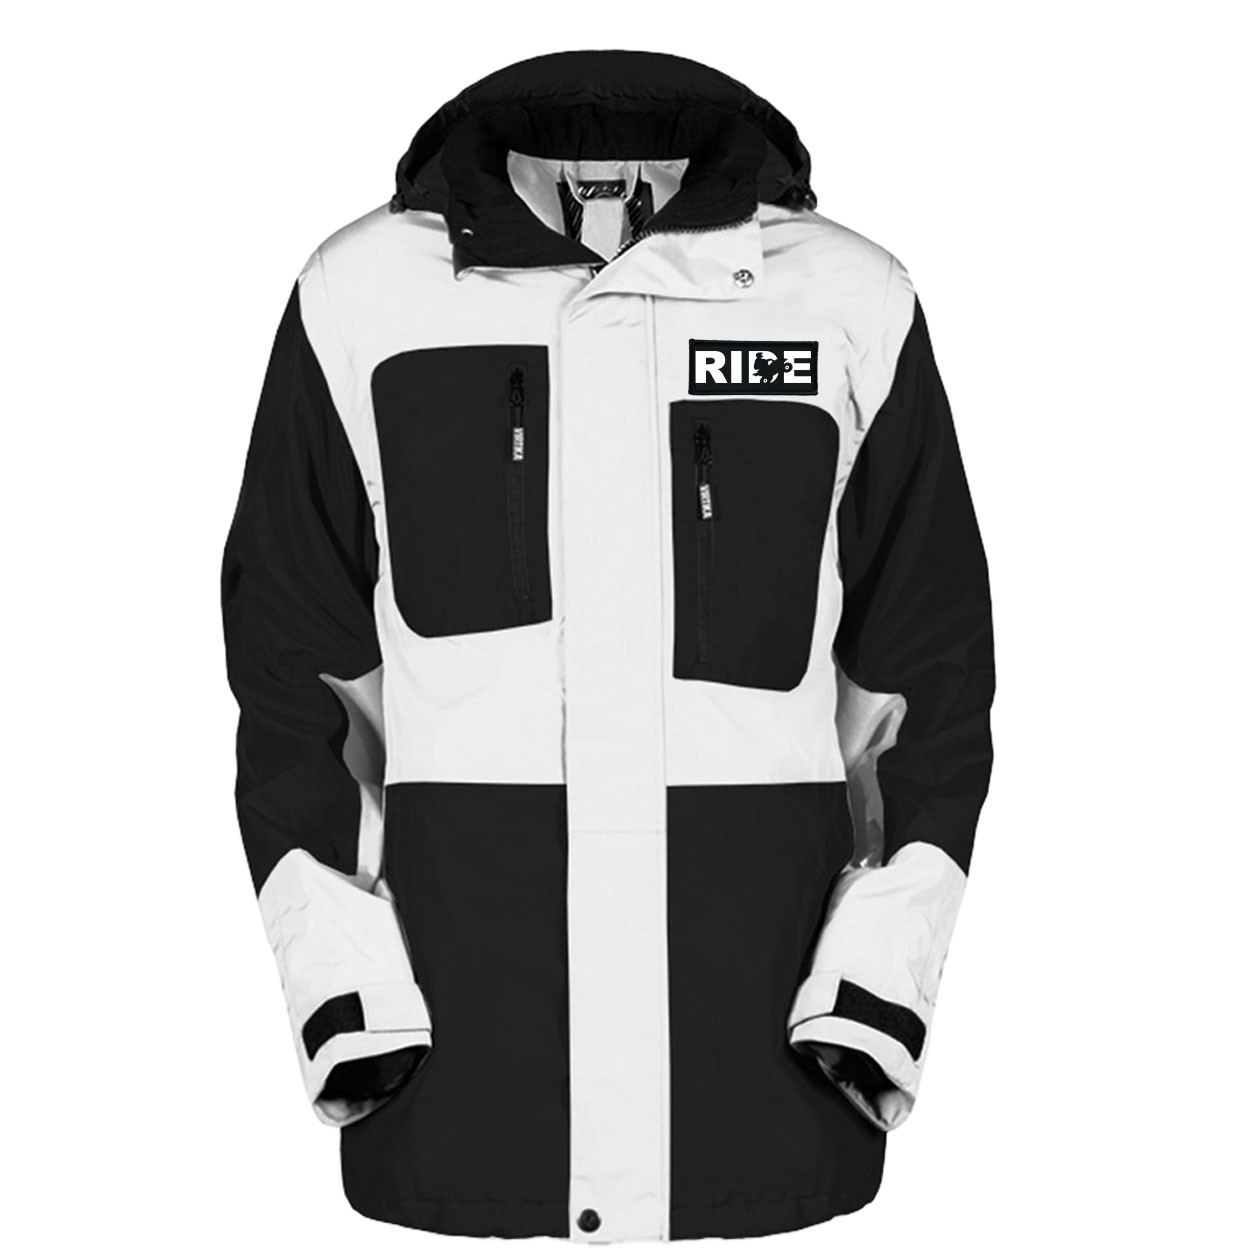 Ride ATV Logo Pro Waterproof Breathable Winter Virtika Jacket Black/White (White Logo)